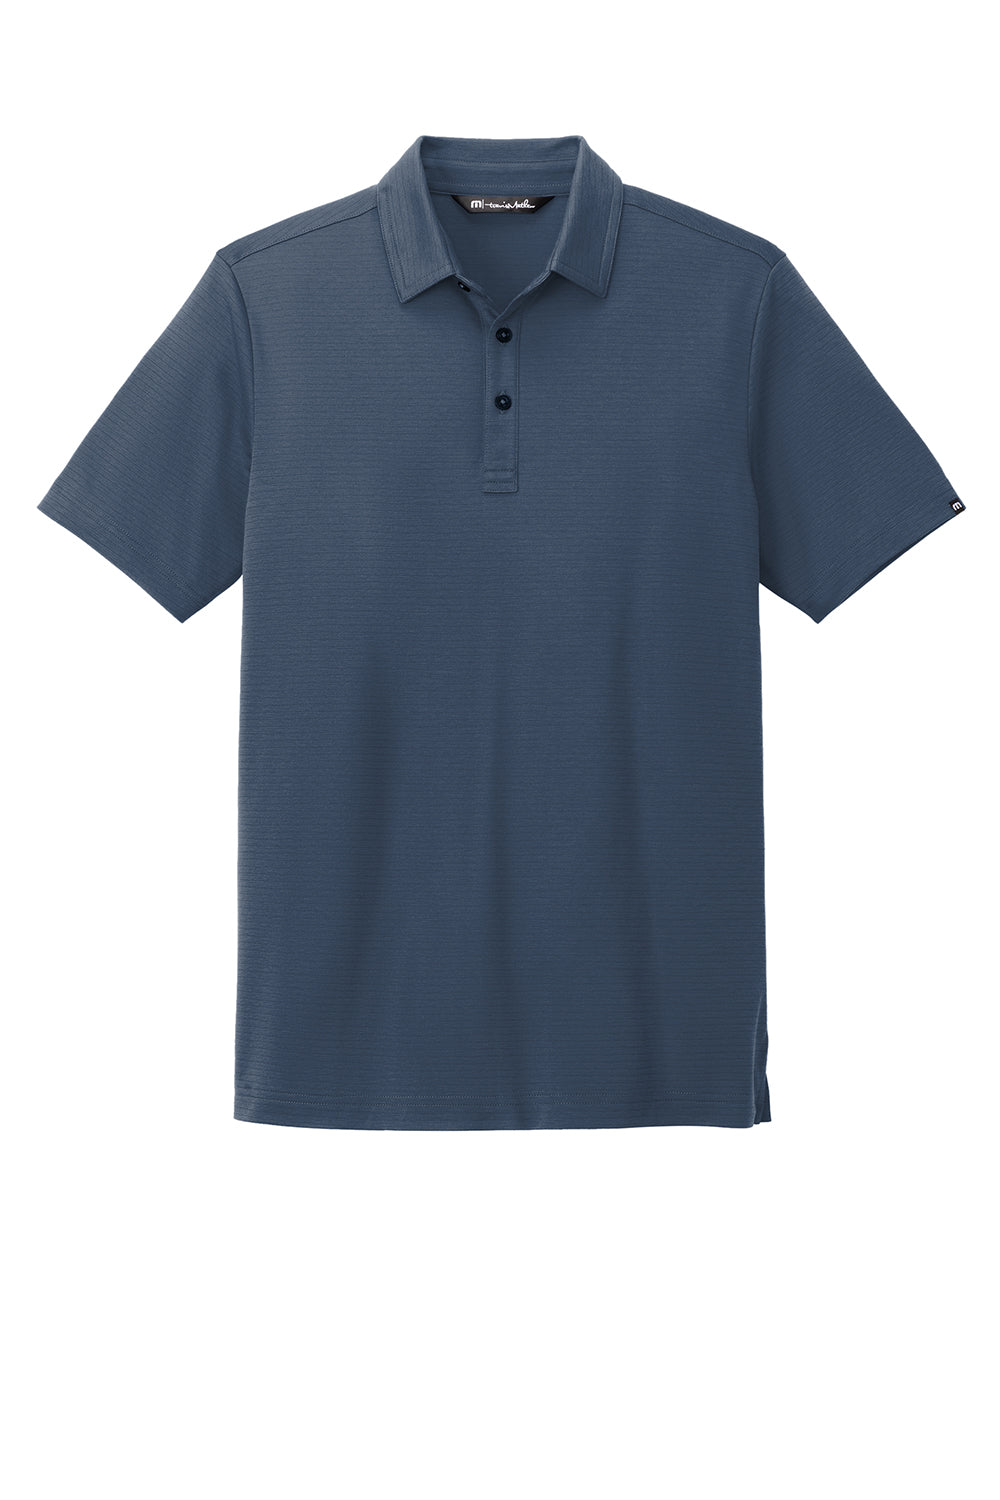 TravisMathew TM1MY399 Mens Bayfront Moisture Wicking Short Sleeve Polo Shirt Insignia Blue Flat Front